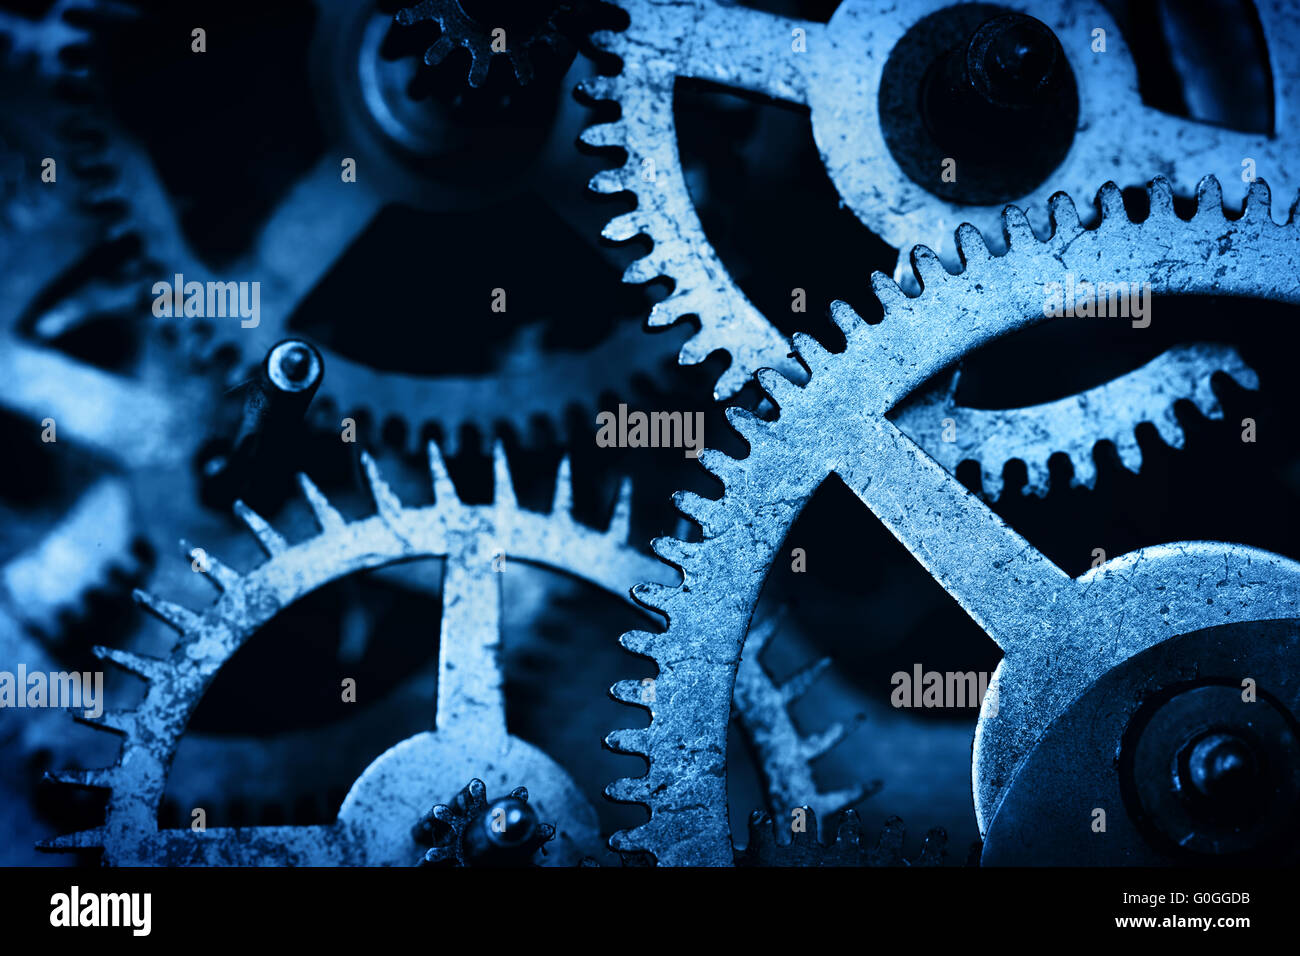 Grunge gear, cog wheels background. Industrial science, clockwork, technology. Stock Photo